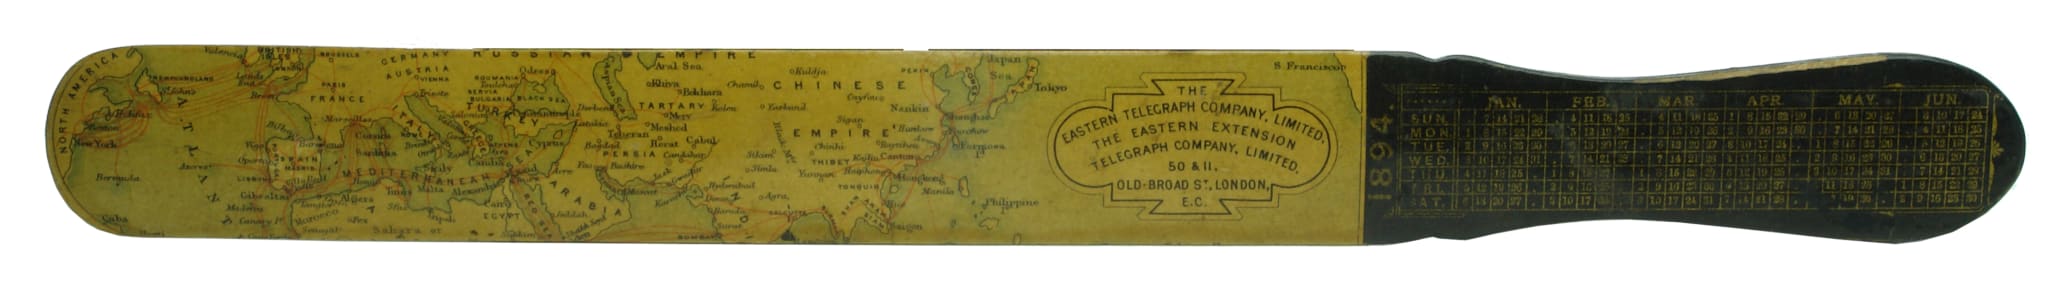 Eastern Telegraph Company Calendar 1894